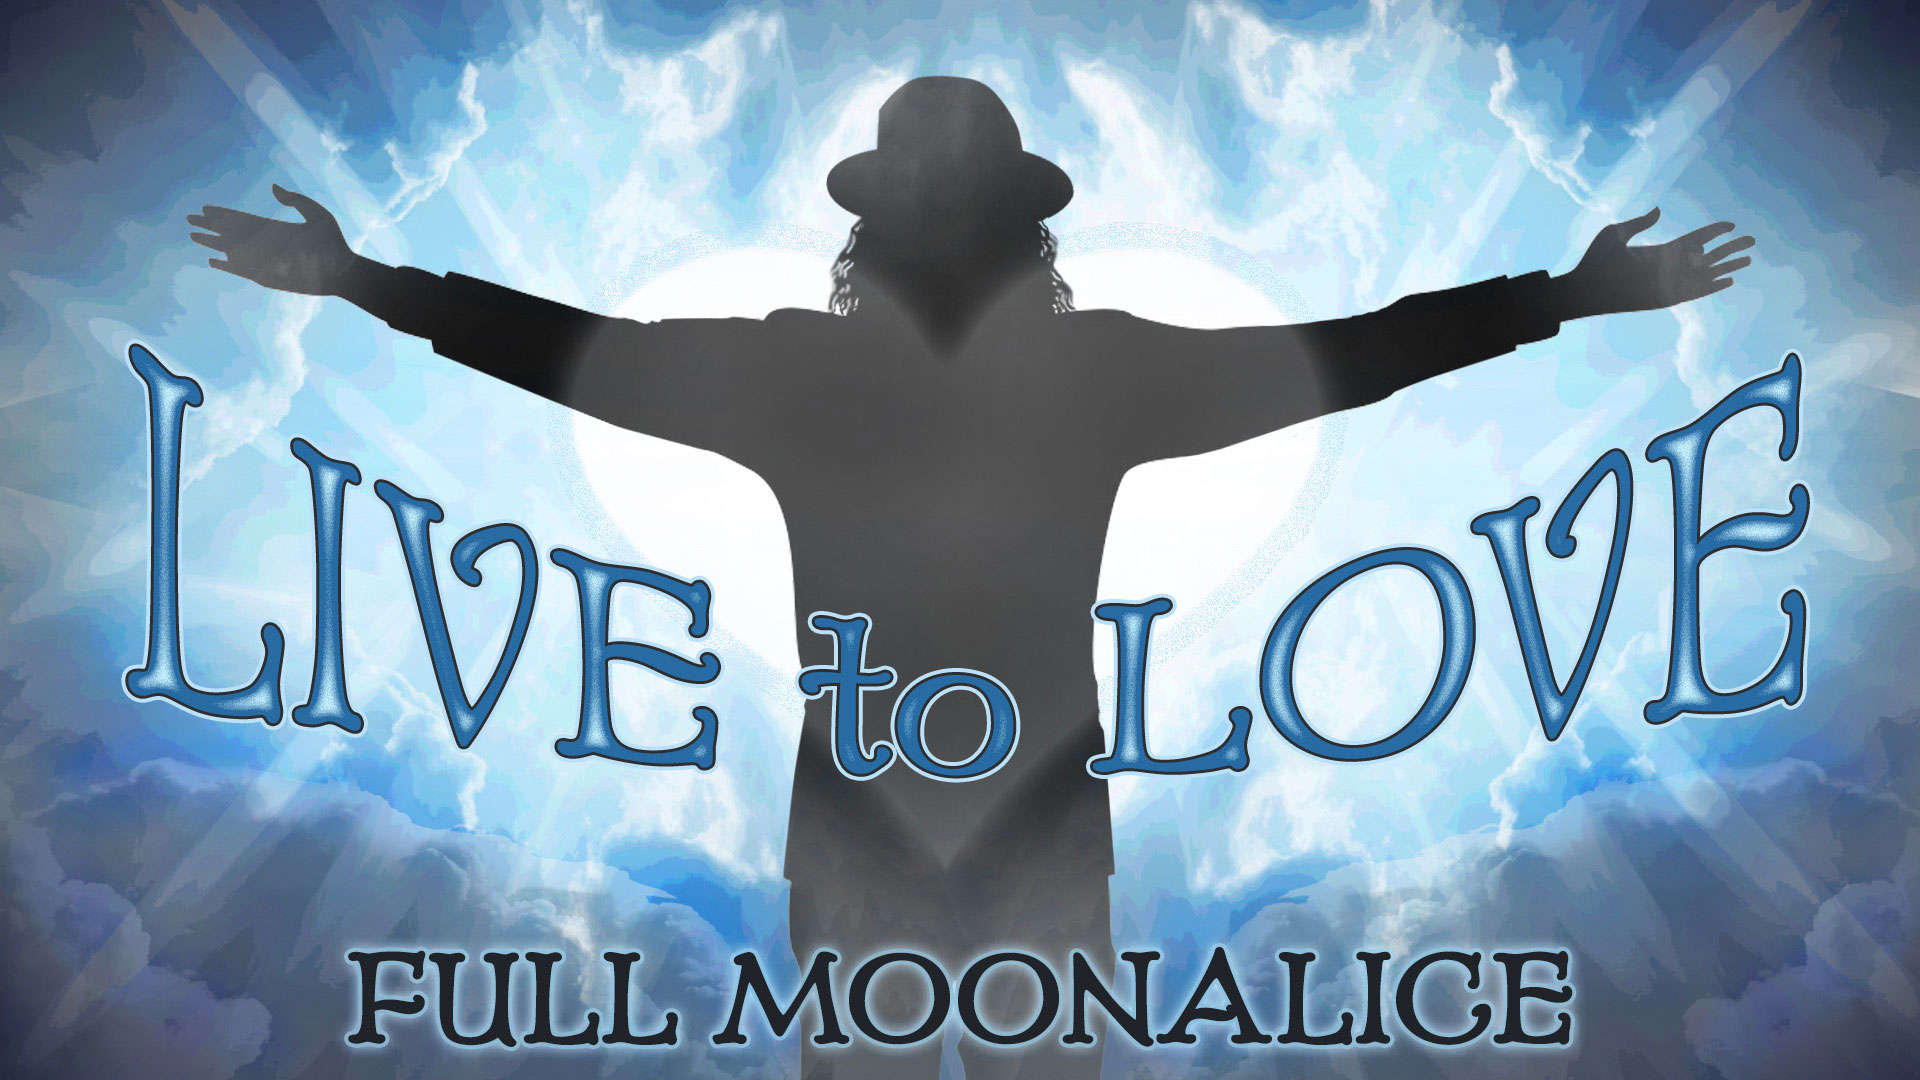 Full Moonalice “Live to Love” art by Darrin Brenner